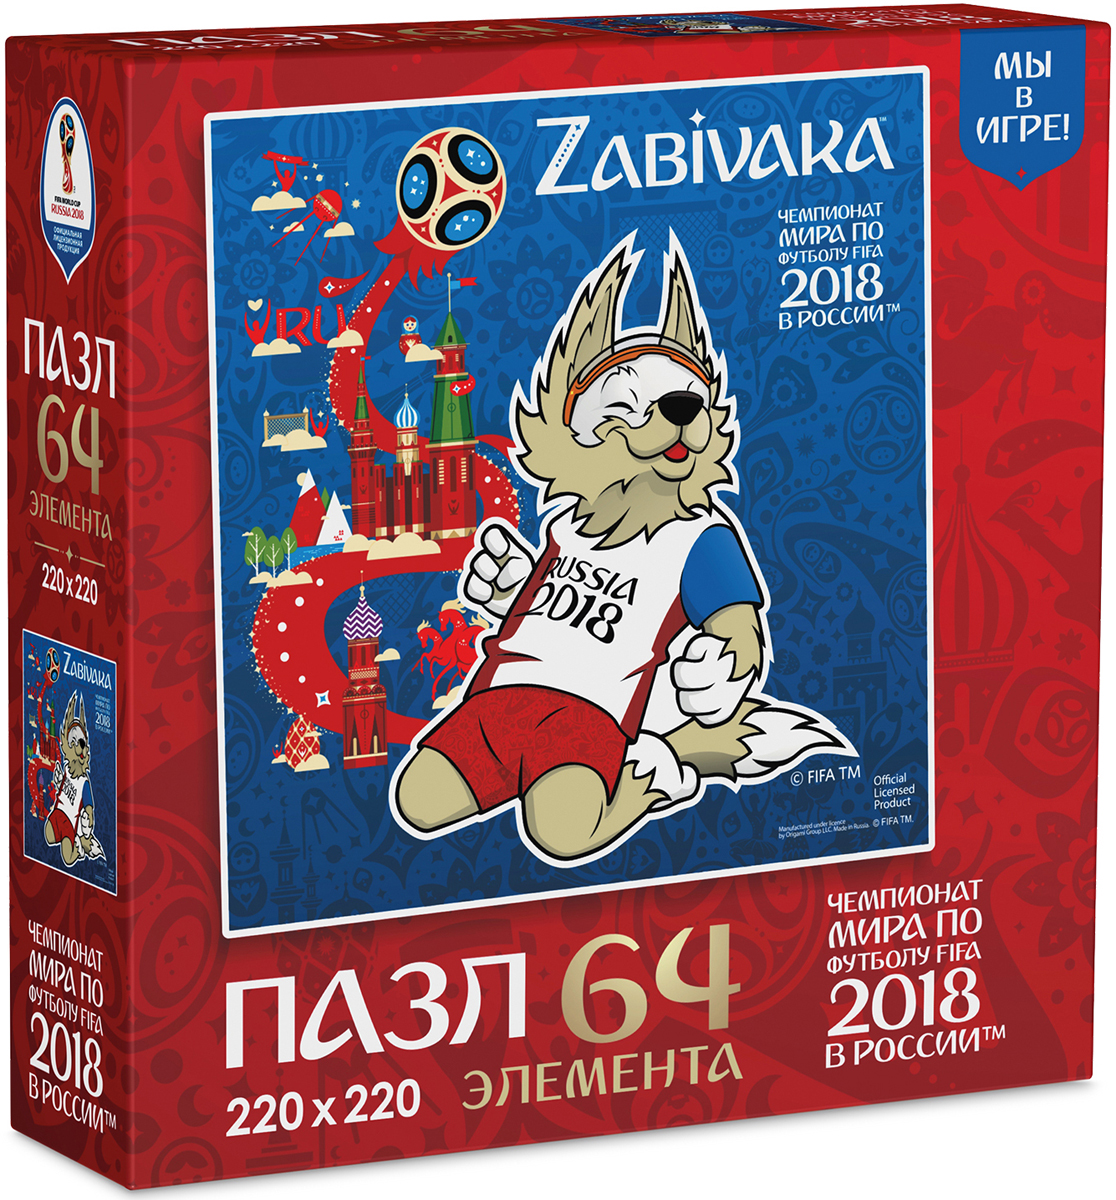 FIFA World Cup Russia 2018 Пазл Забивака Мы выиграли 03792